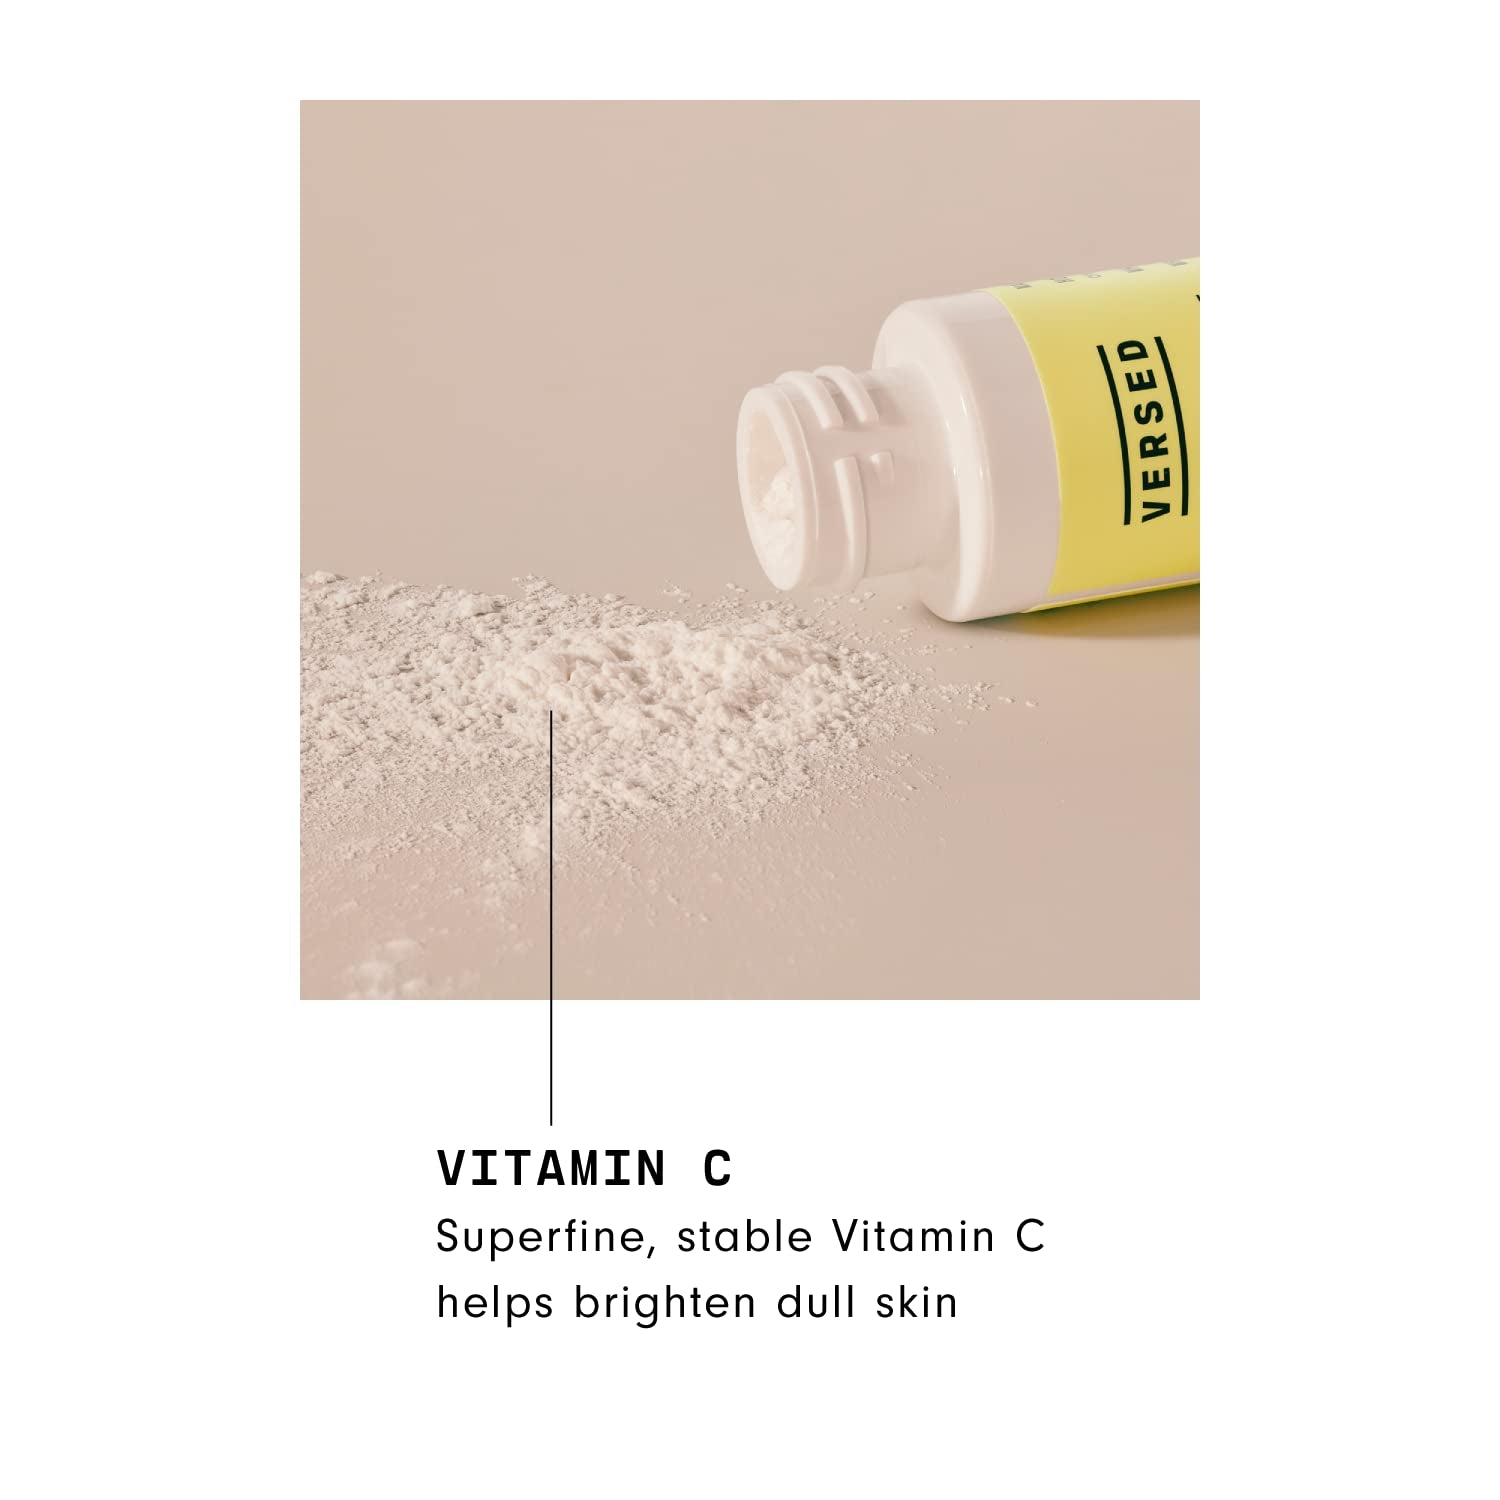 "Versed Found the Light Vitamin C Powder - Anti-Aging Face Serum Powder - Dark Spot Corrector - Vegan (0.3 Oz)"